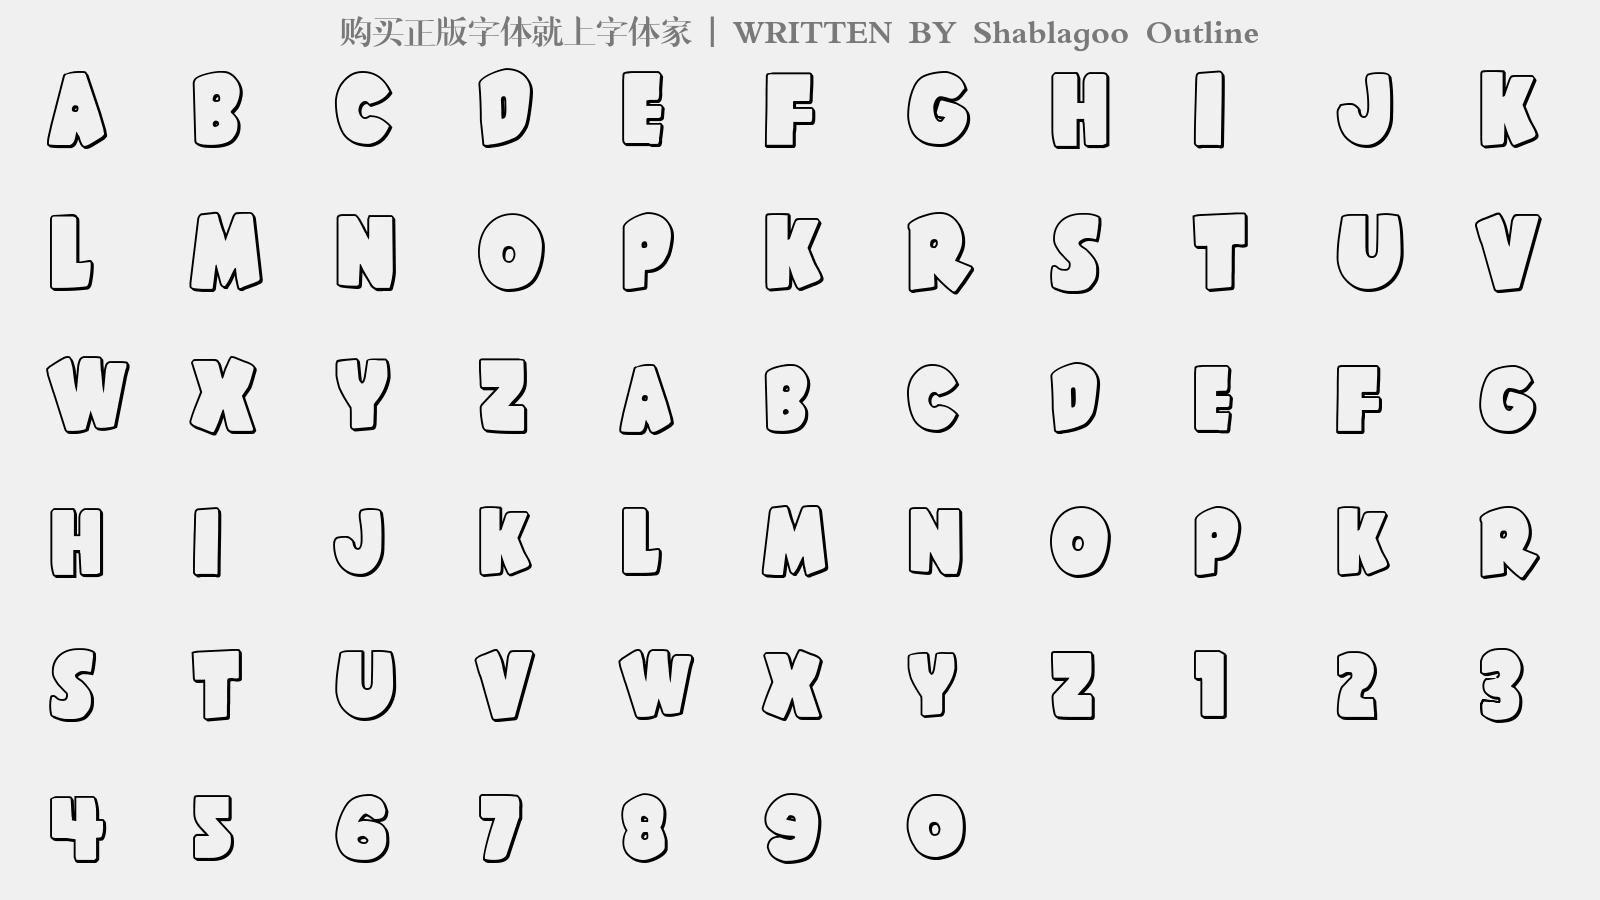 Shablagoo Outline - 大写字母/小写字母/数字